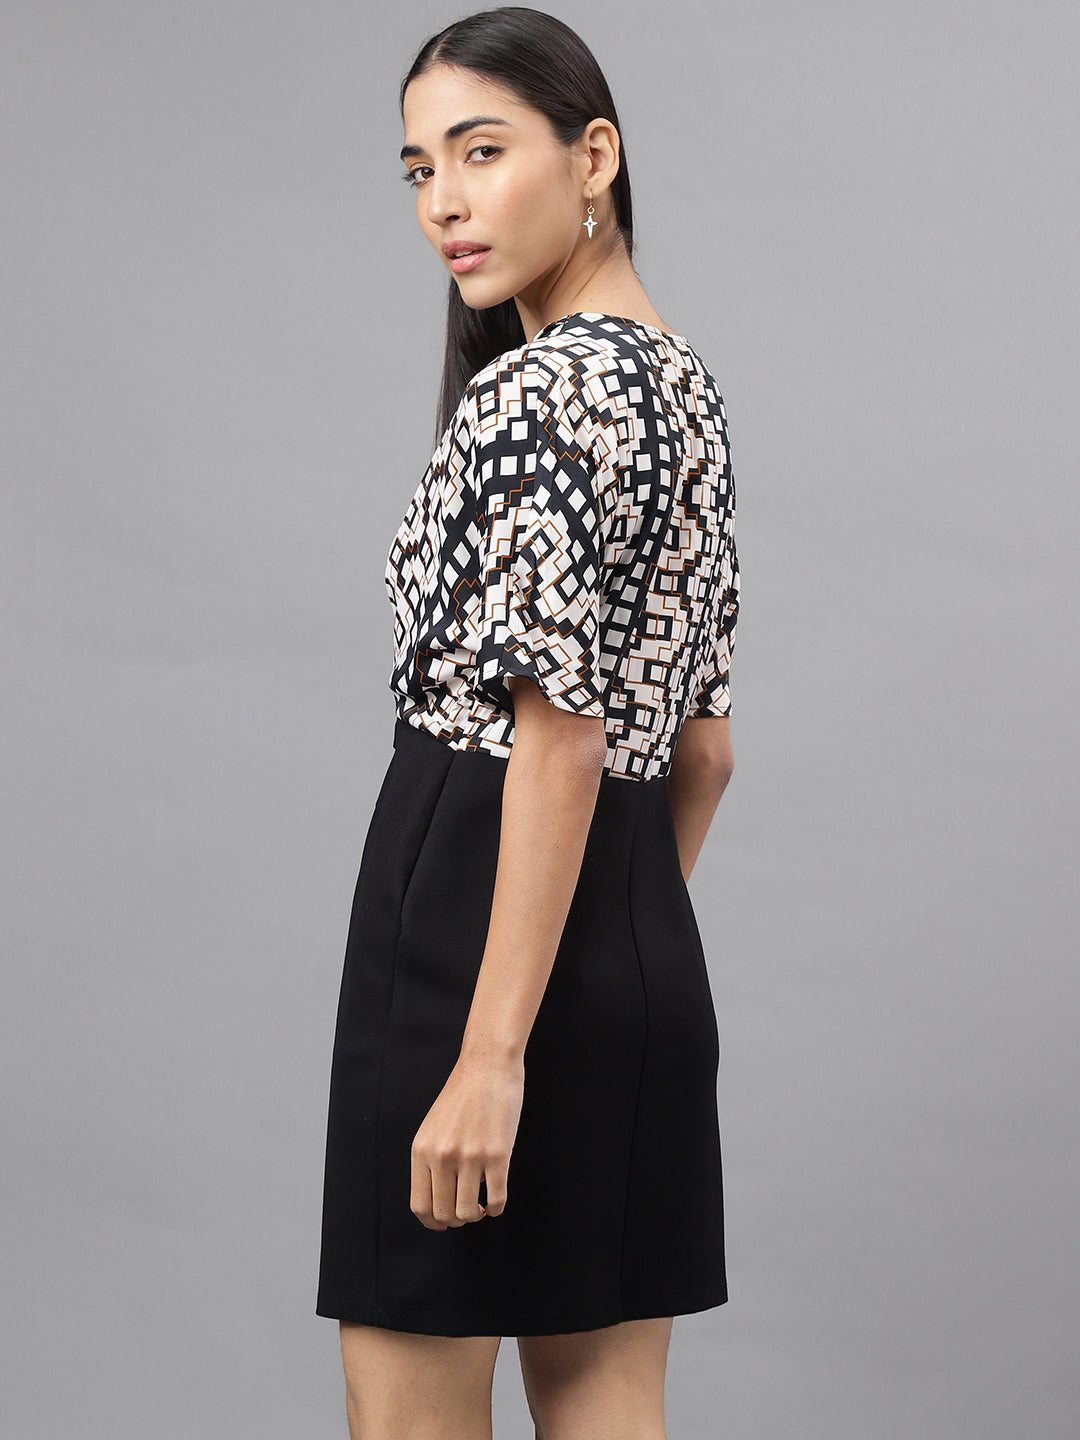 Black Half Sleeve V-Neck Printed 2 Fir 1 Dress